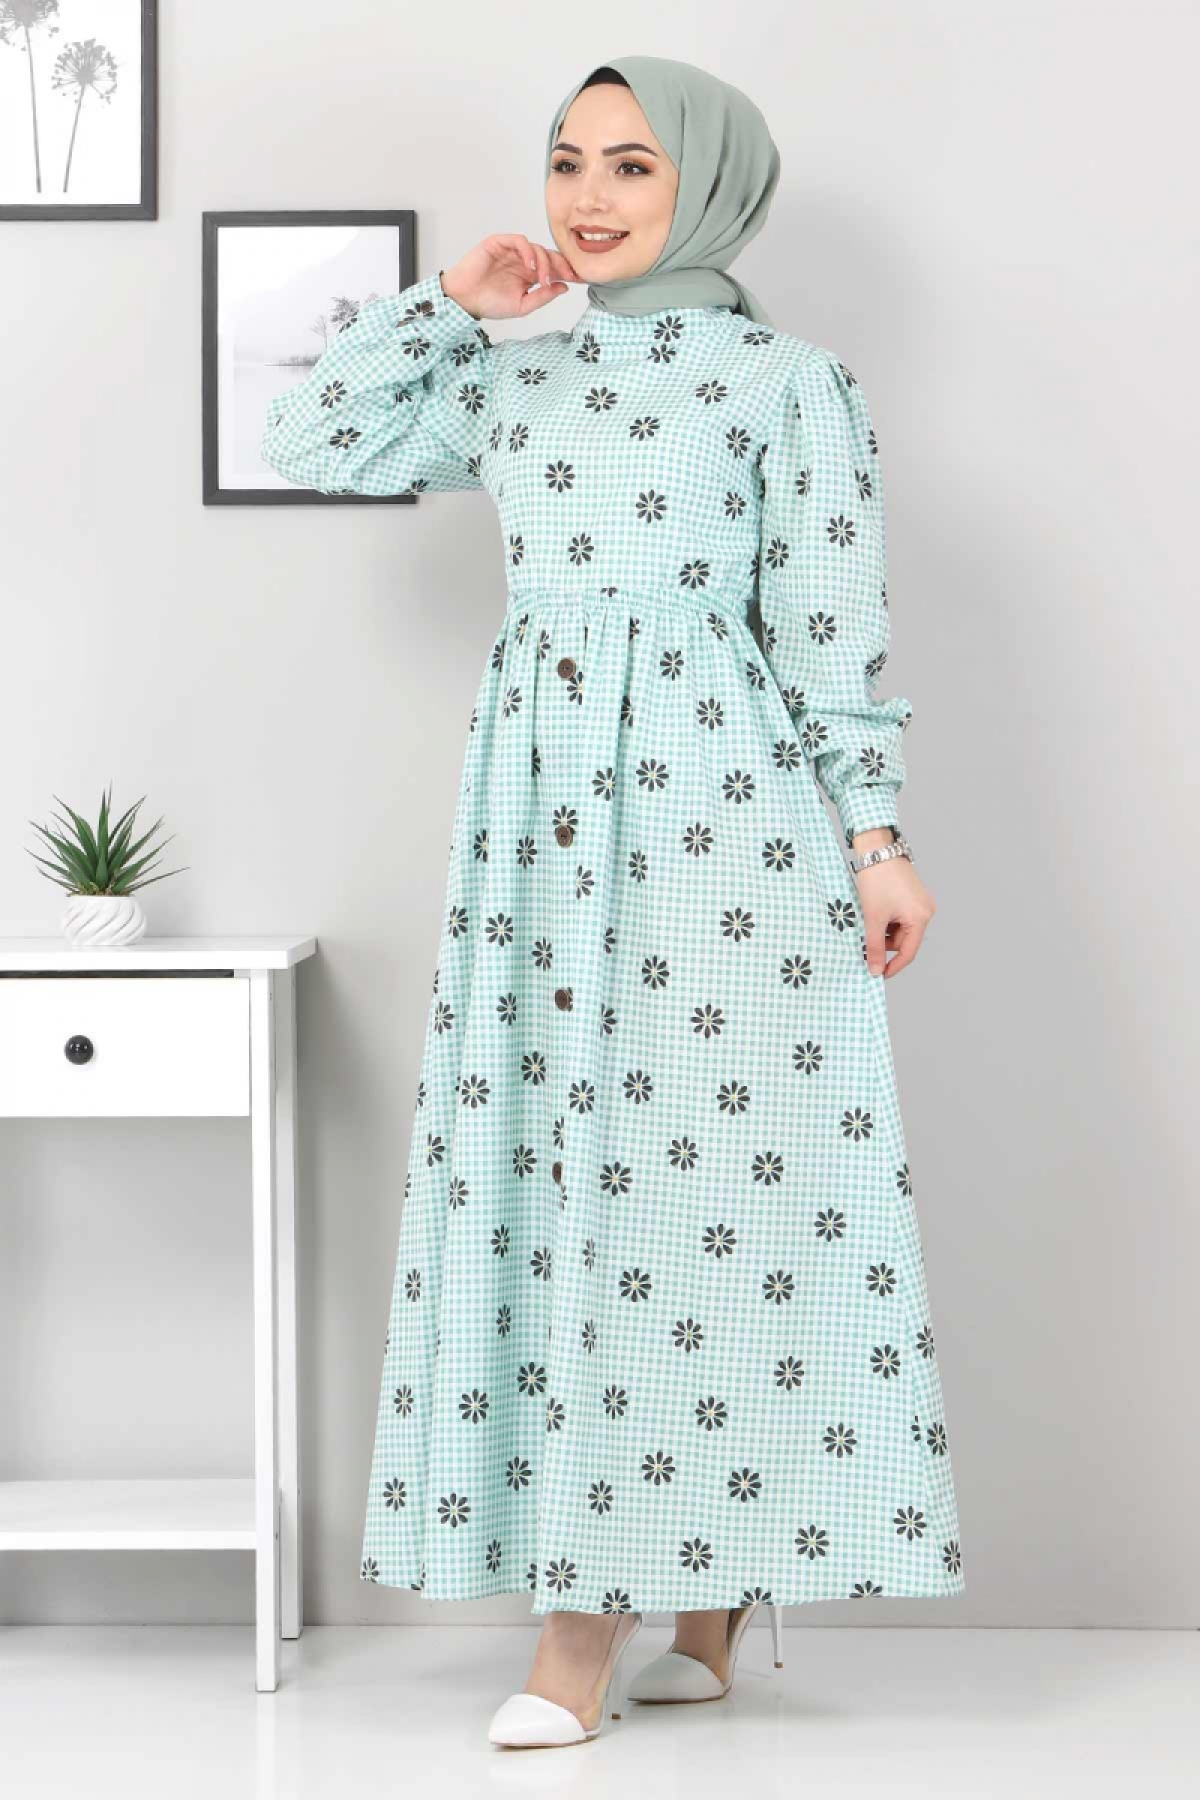 Tesettür Dünyası - Floral Patterned Fleece Check Dress TSD4743 Green